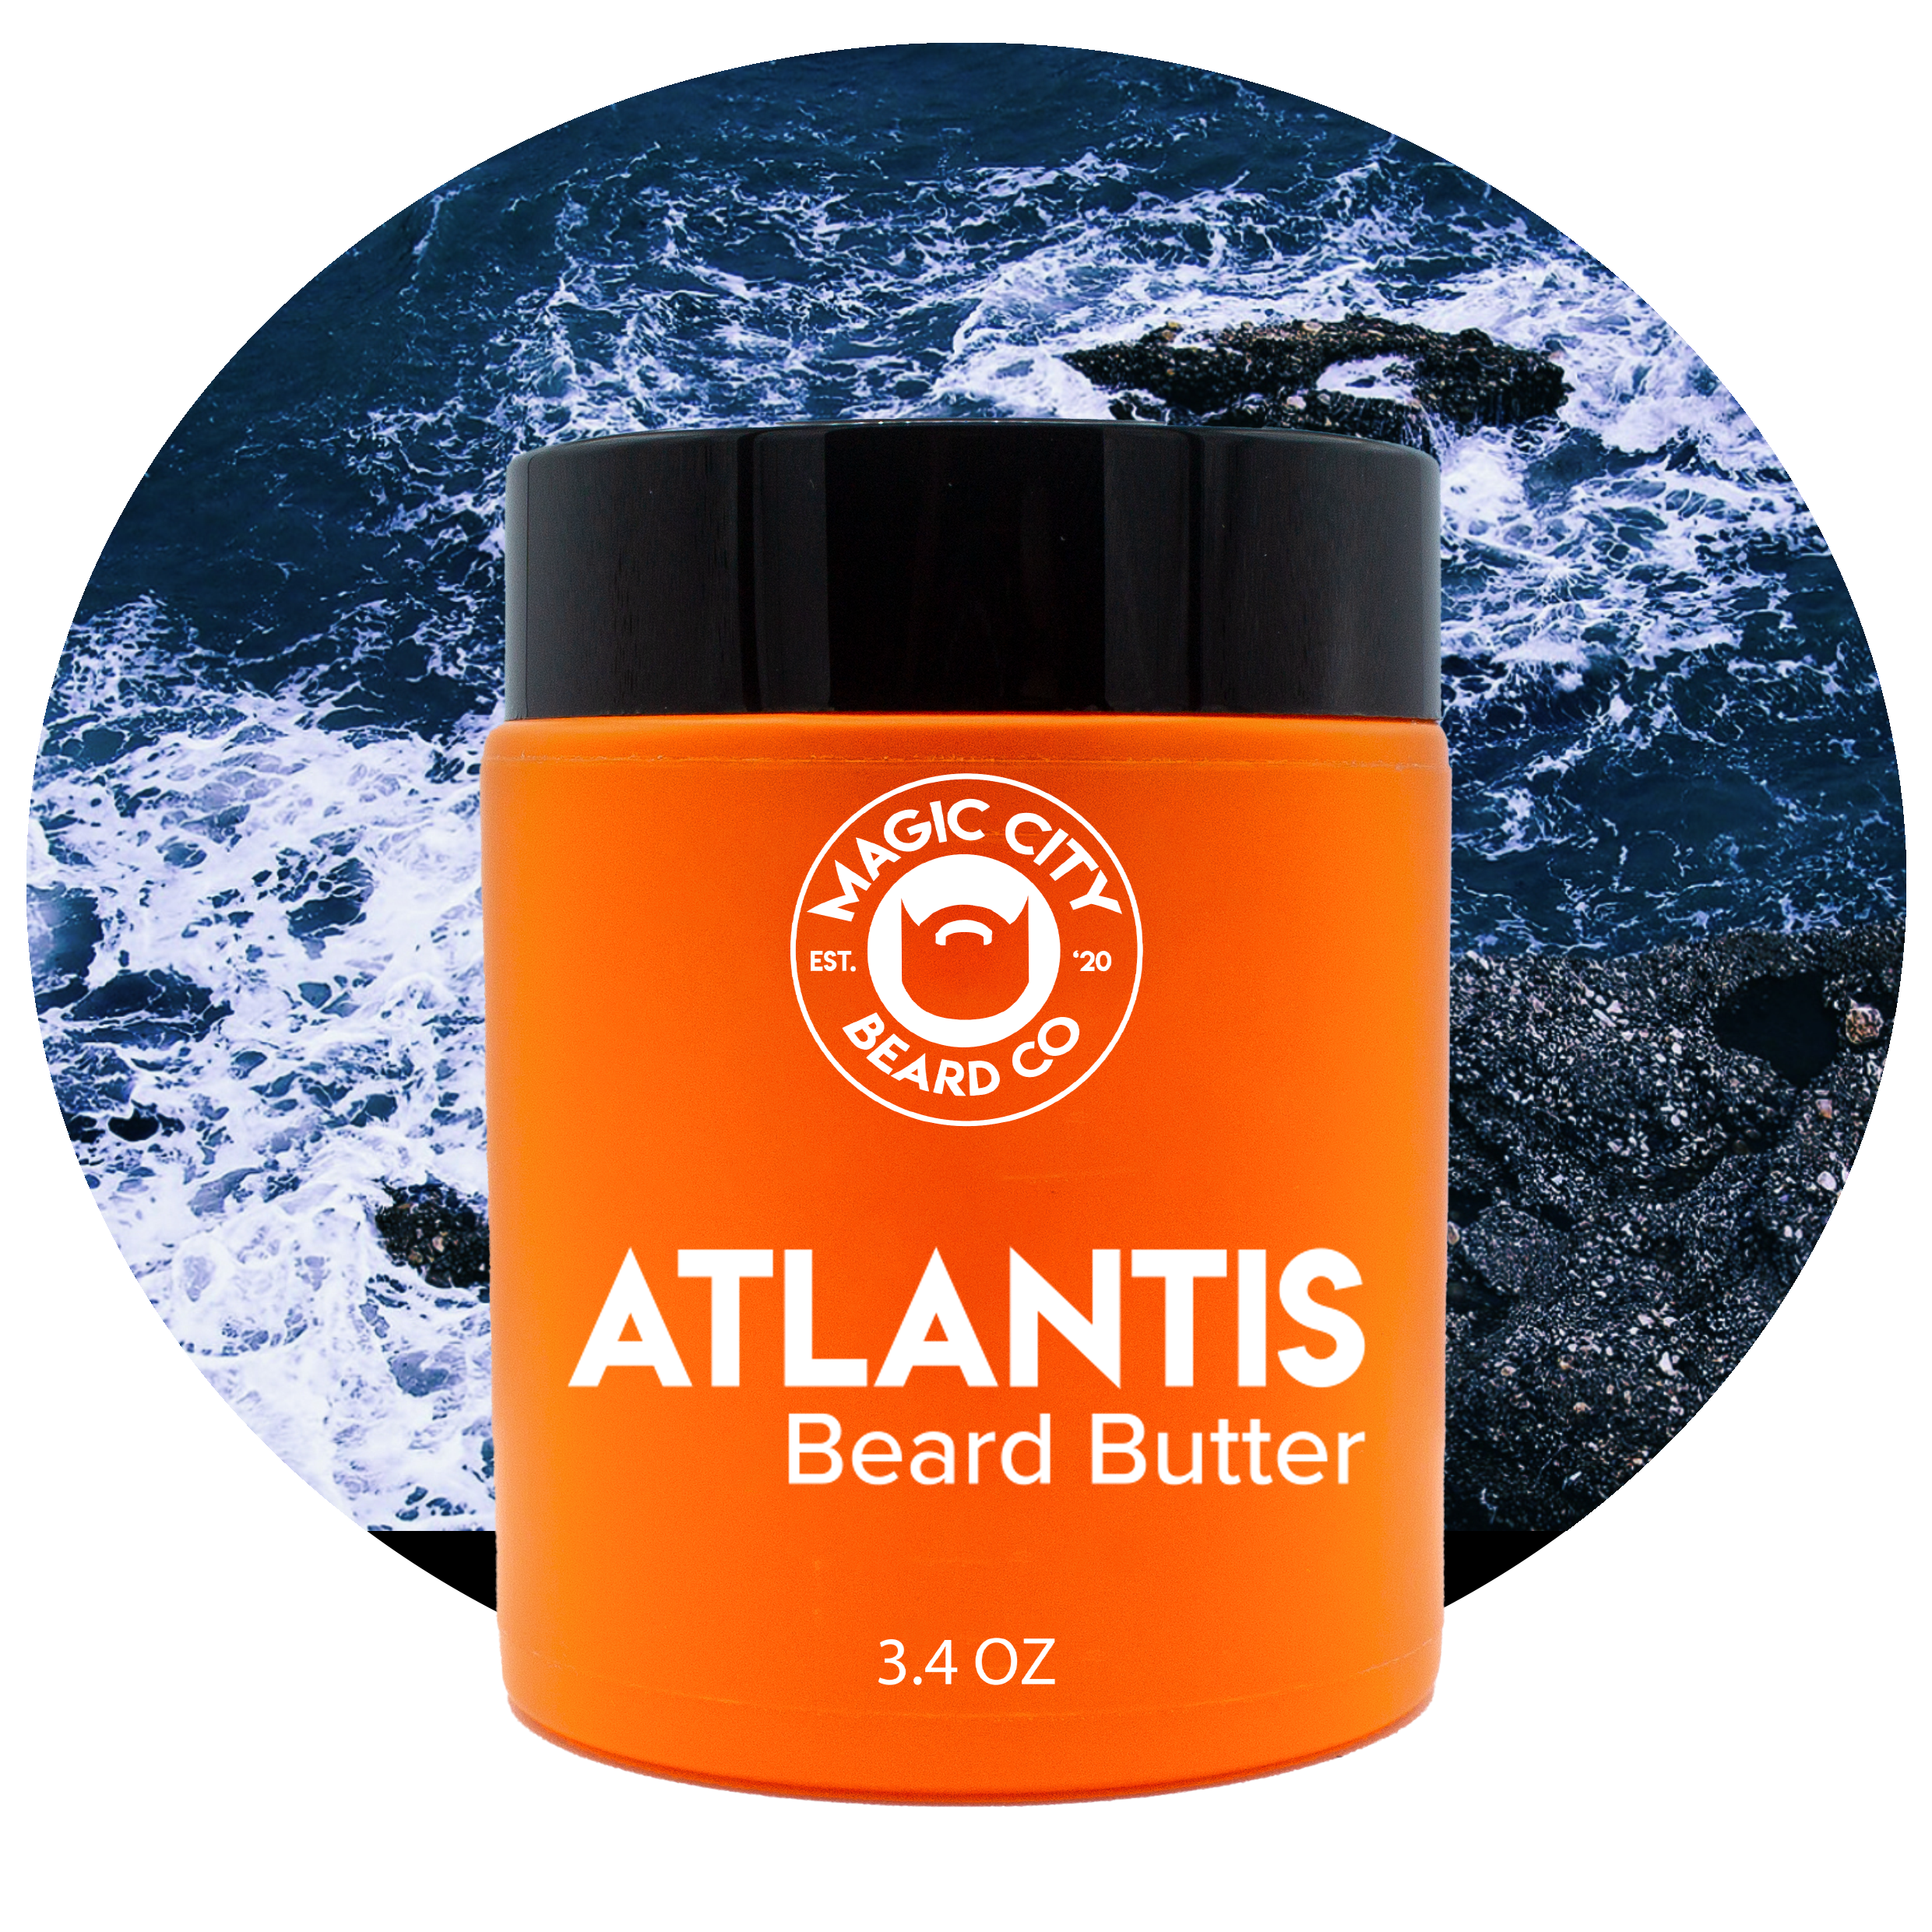 Atlantis Beard Butter